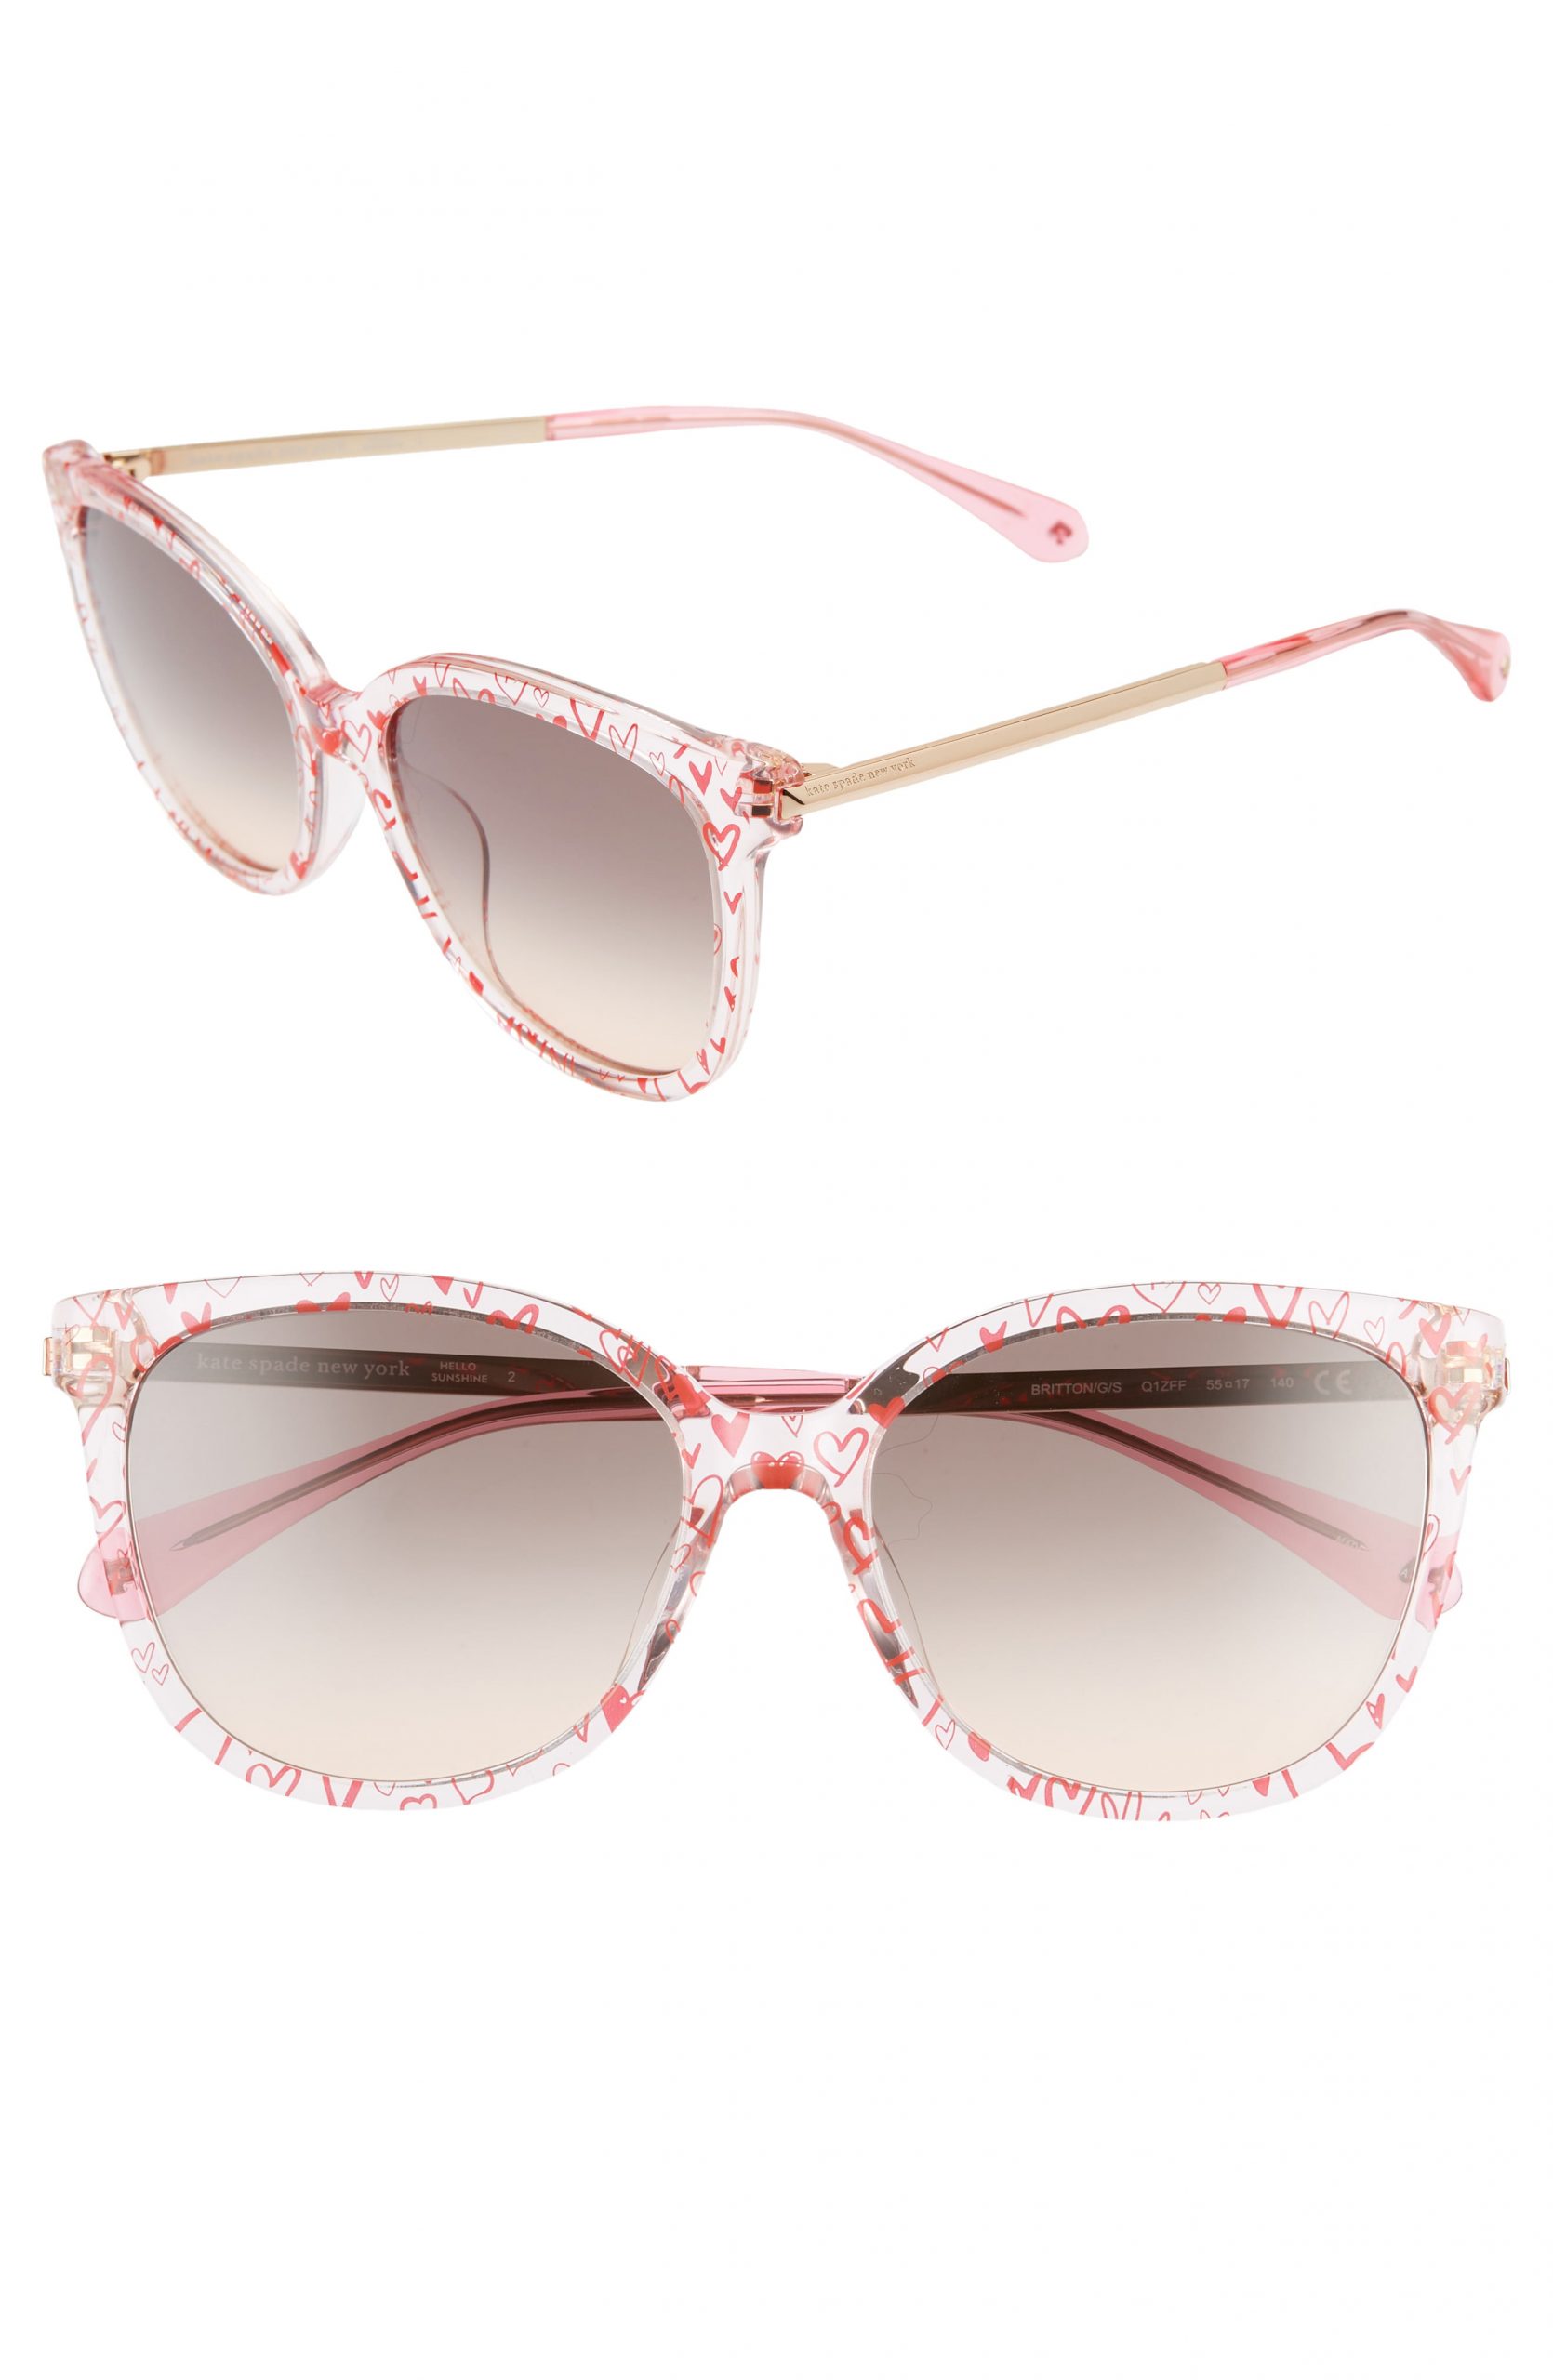 Kate Spade New York Britton 55mm Cat Eye Sunglasses - Pink/ Grey Fuschia | Fashion Gone Rogue